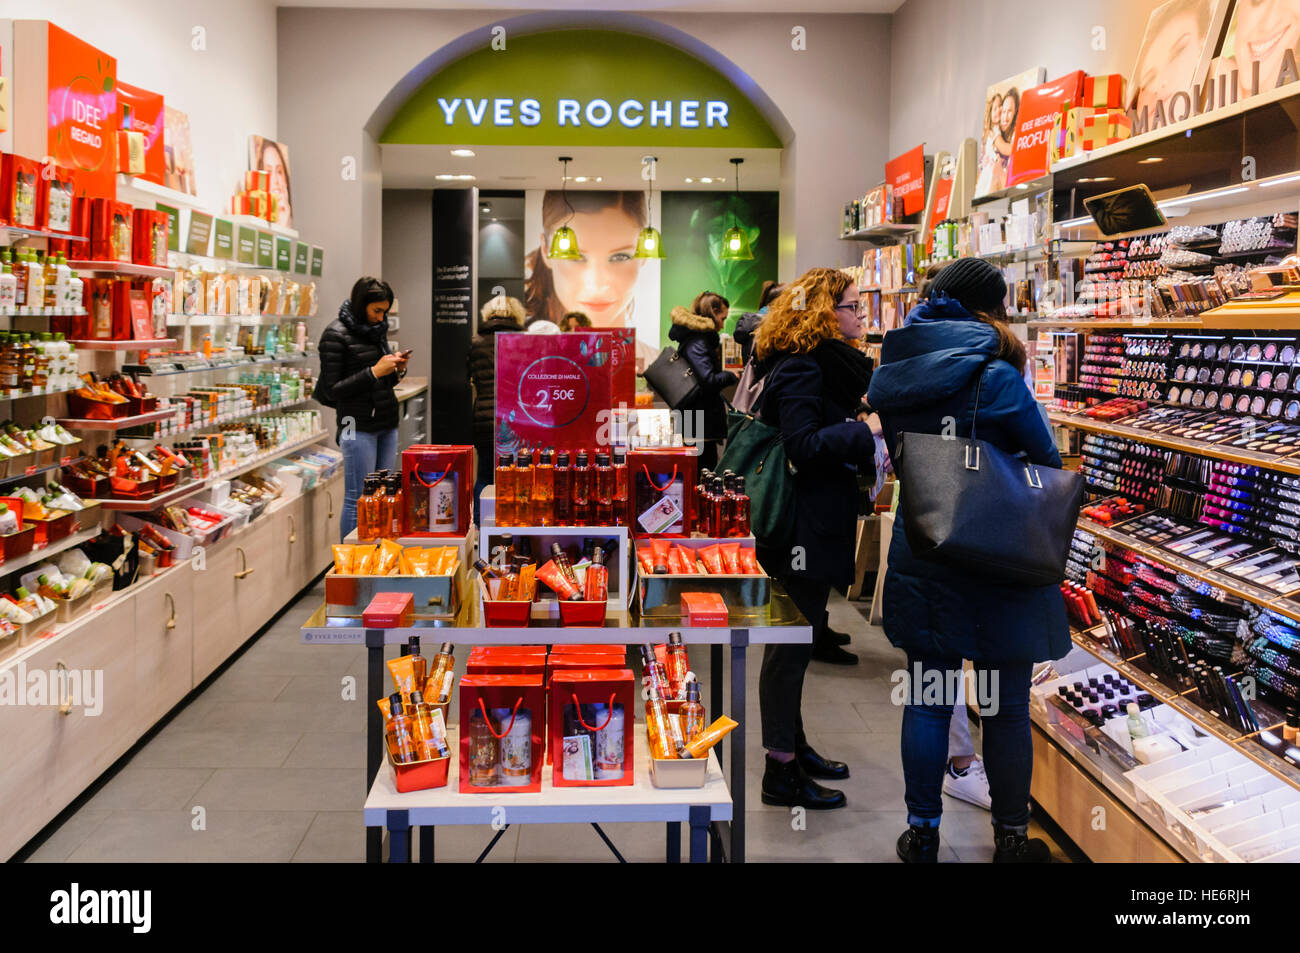 Yves Rocher cosmetics shop, Milan, Italy Stock Photo - Alamy